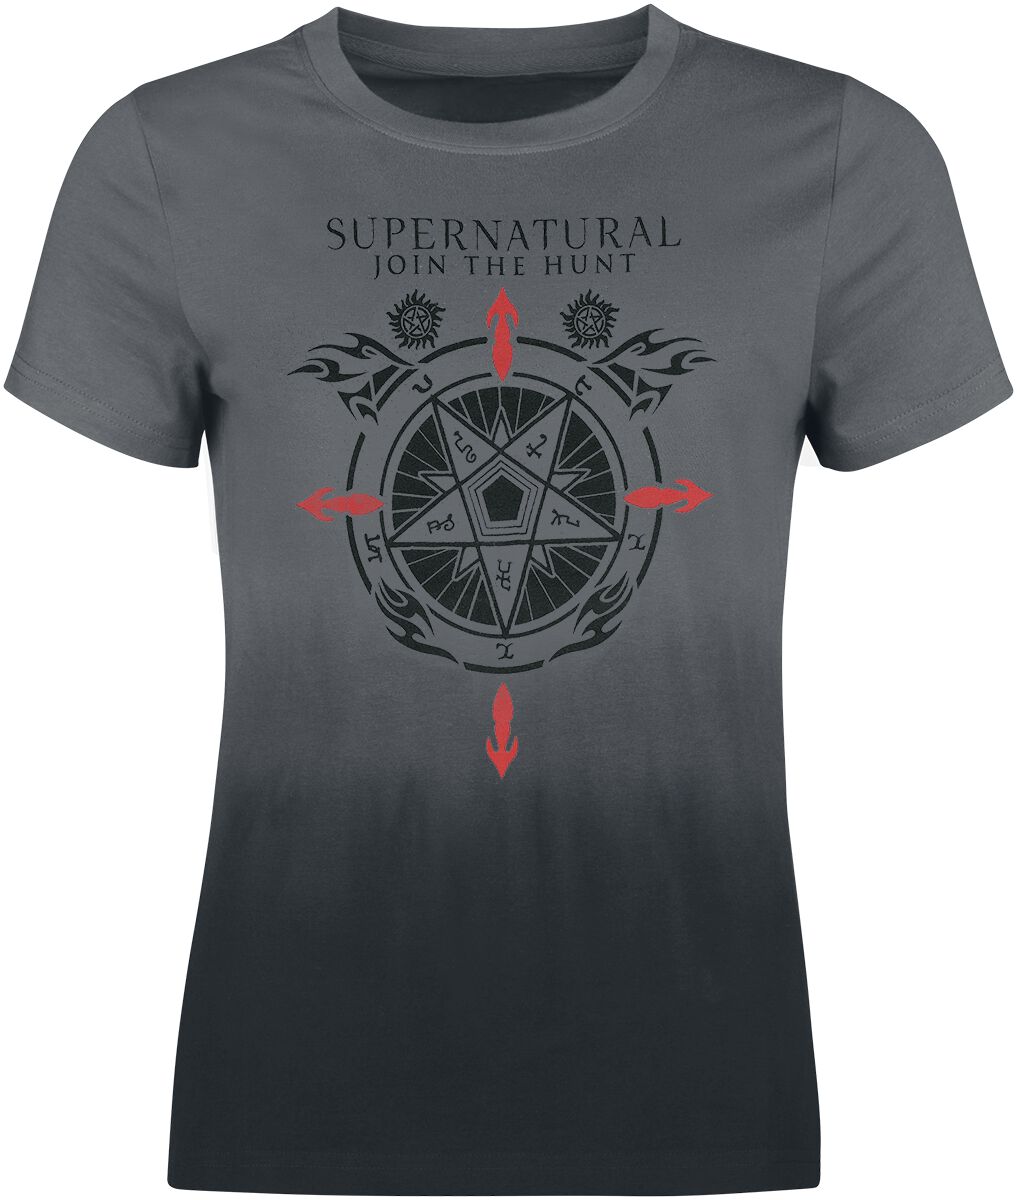 Supernatural Symbols T-Shirt multicolor in S